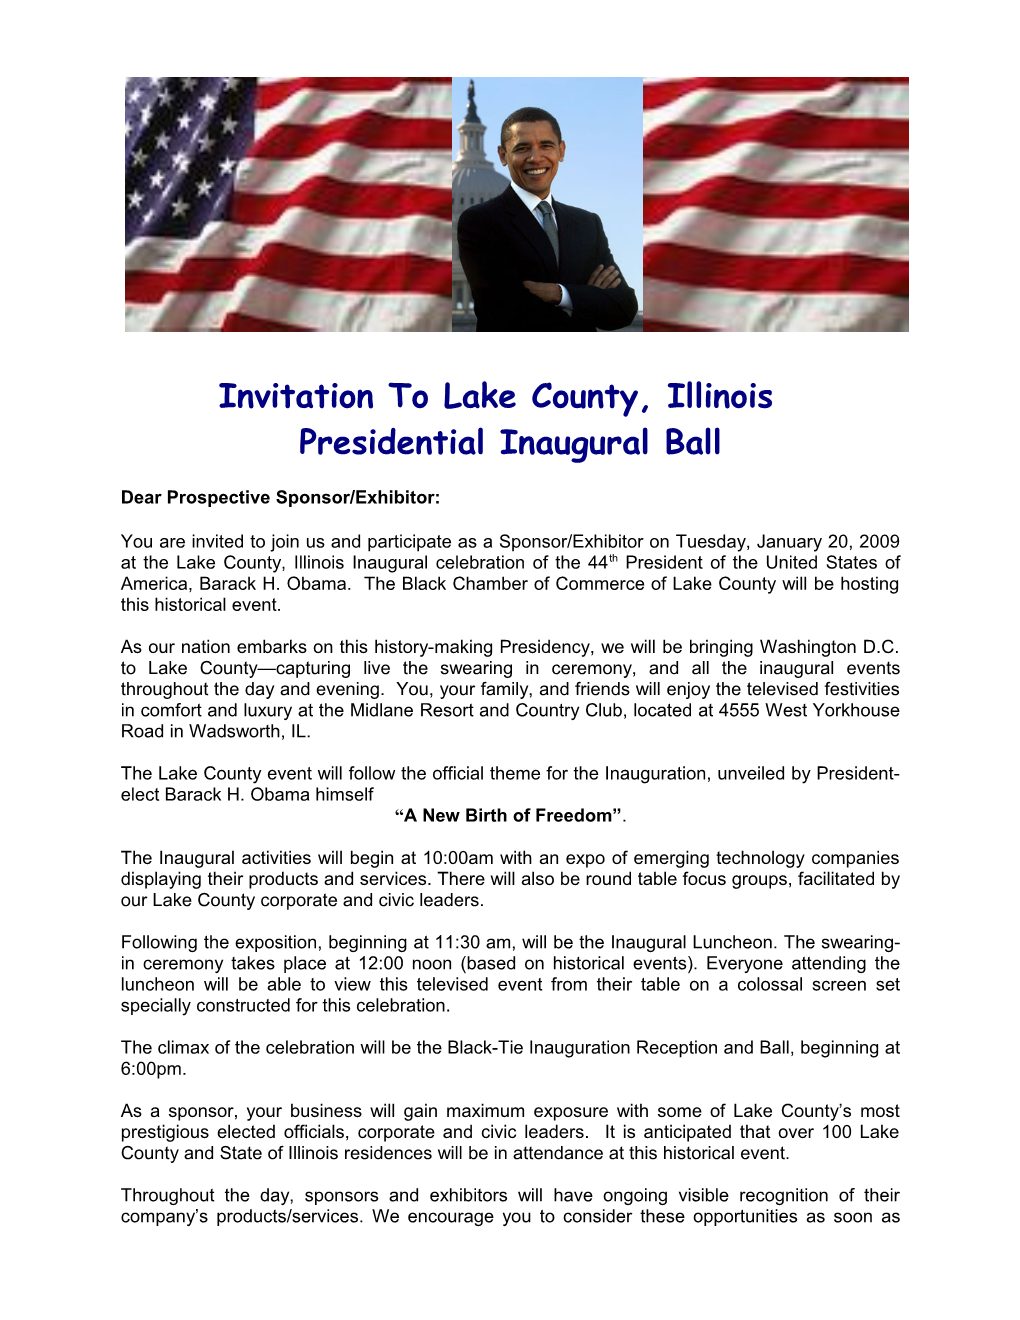 Invitation to Lake County, Illinois